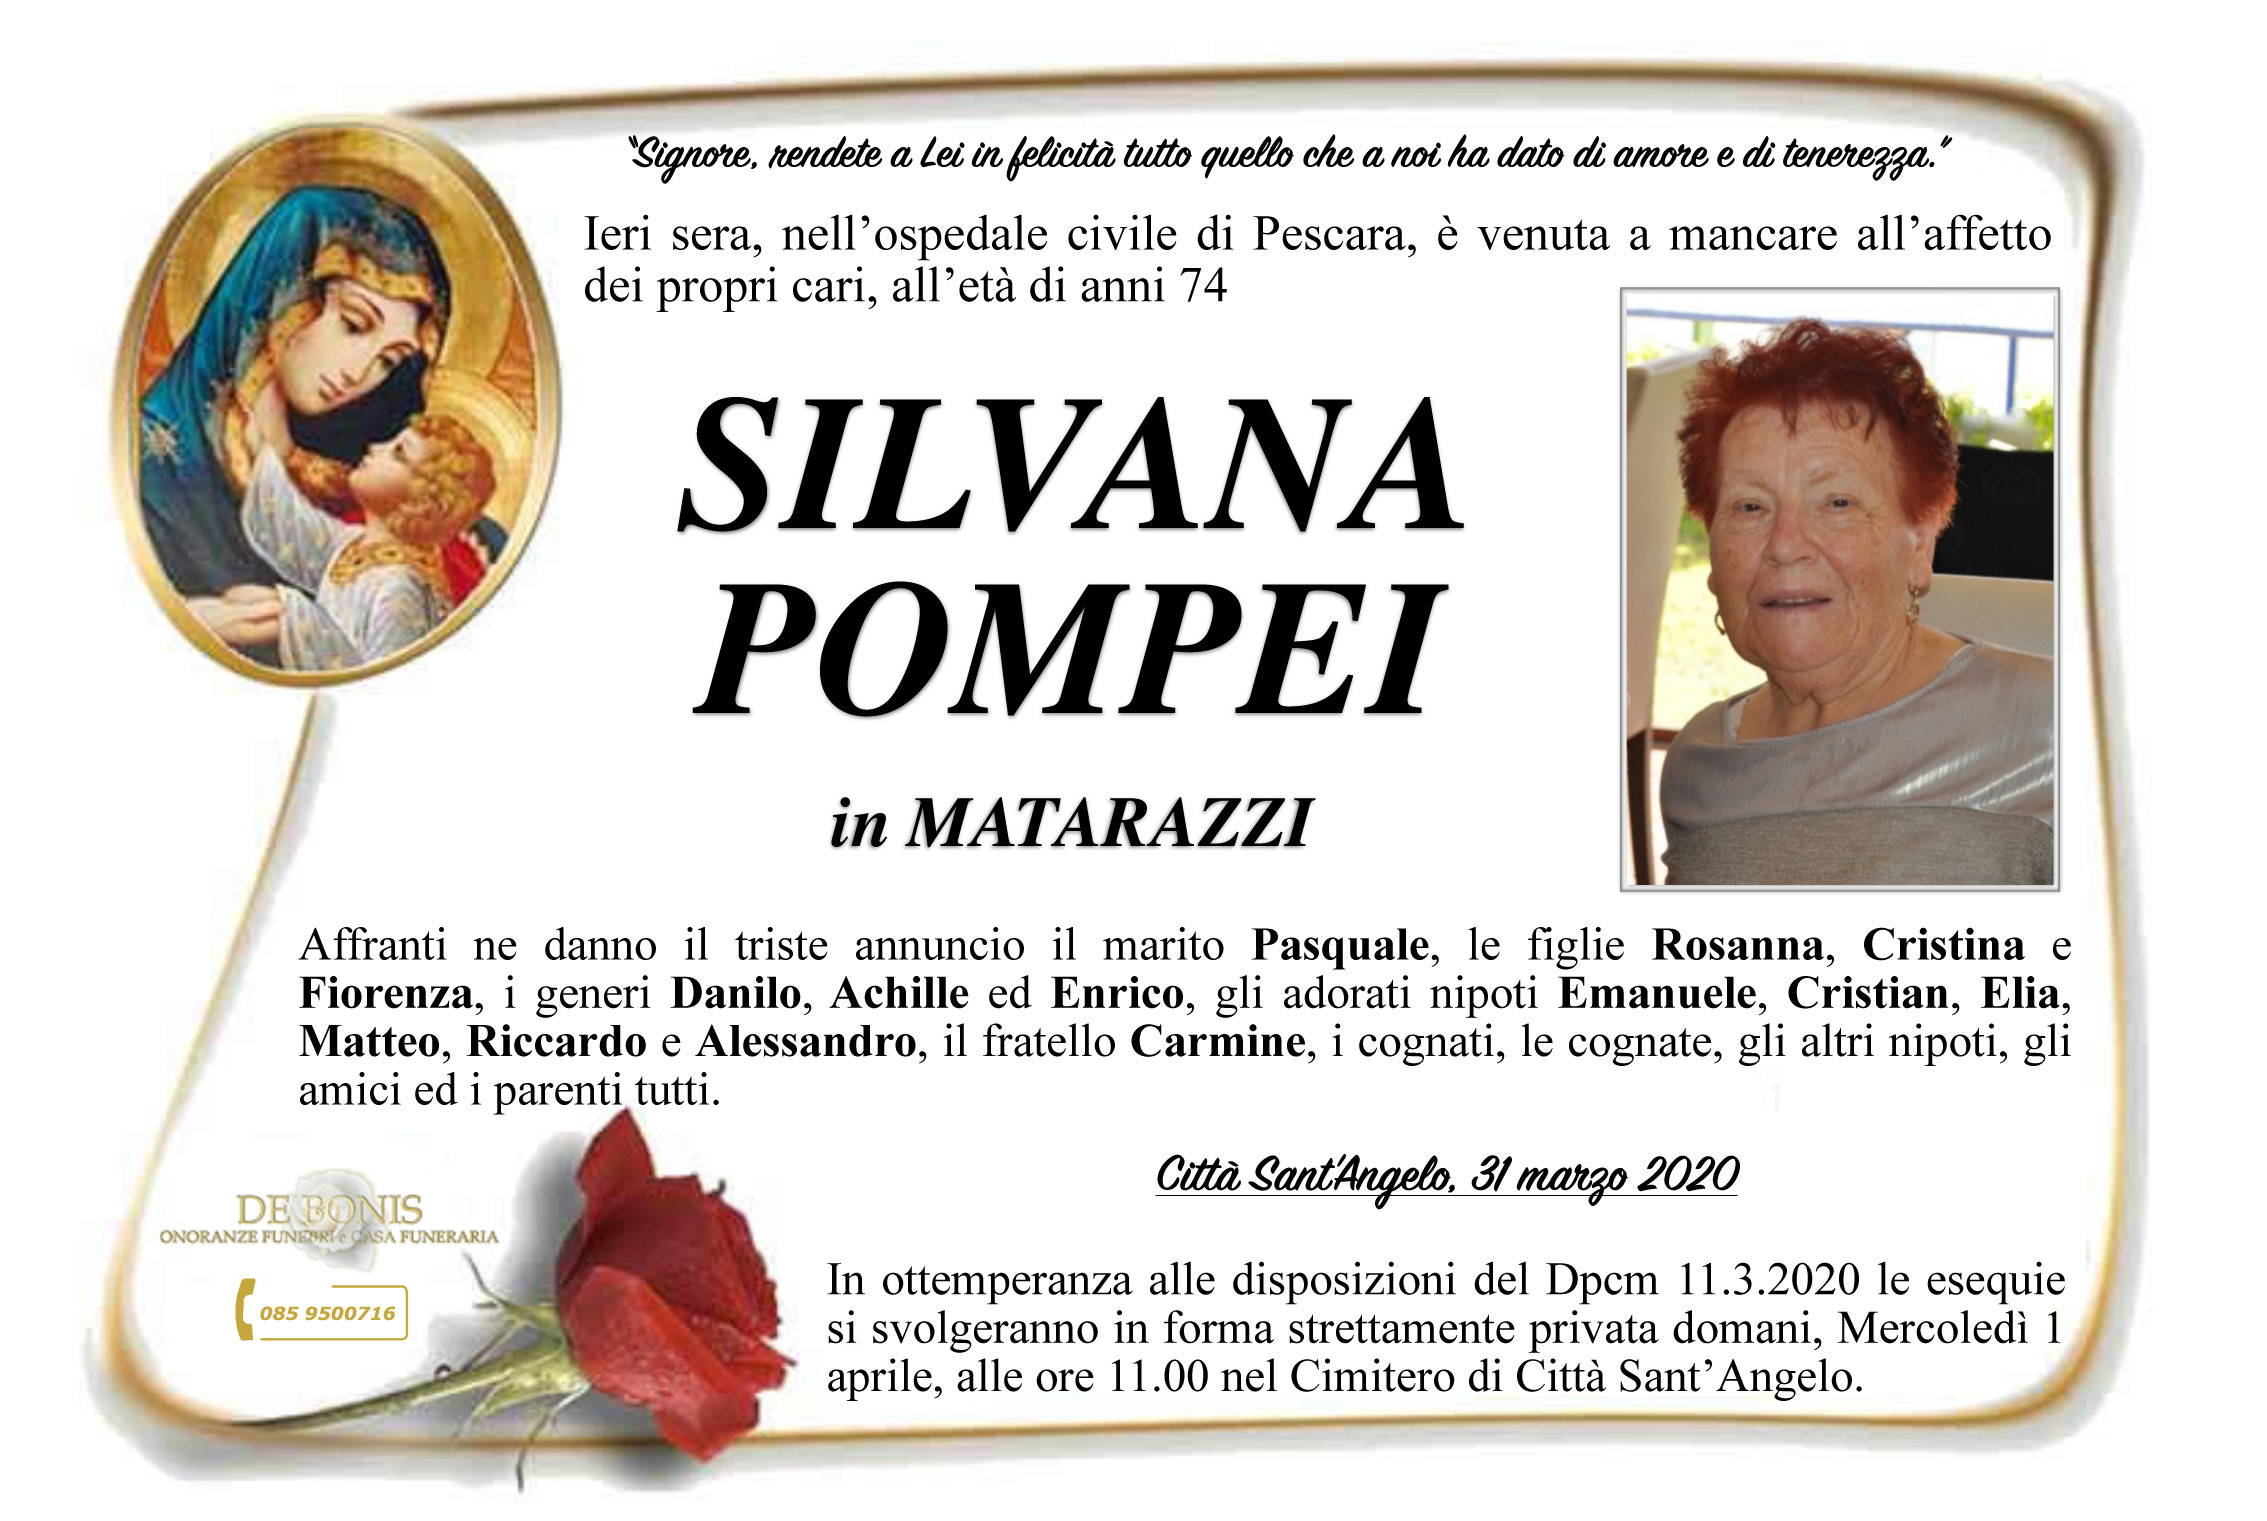 Silvana Pompei